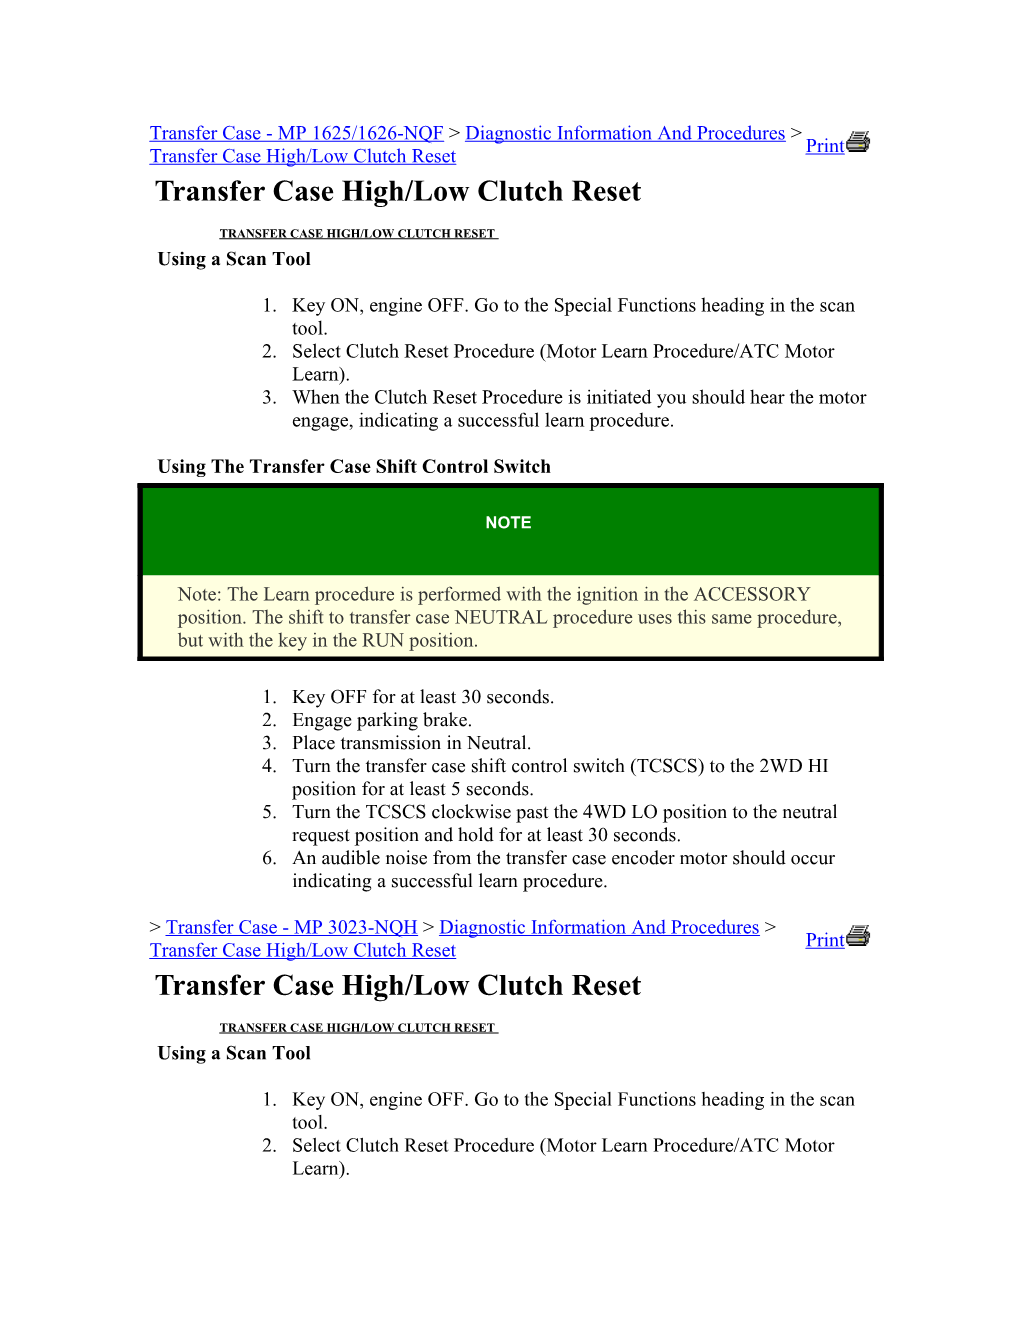 Transfer Case High/Low Clutch Reset